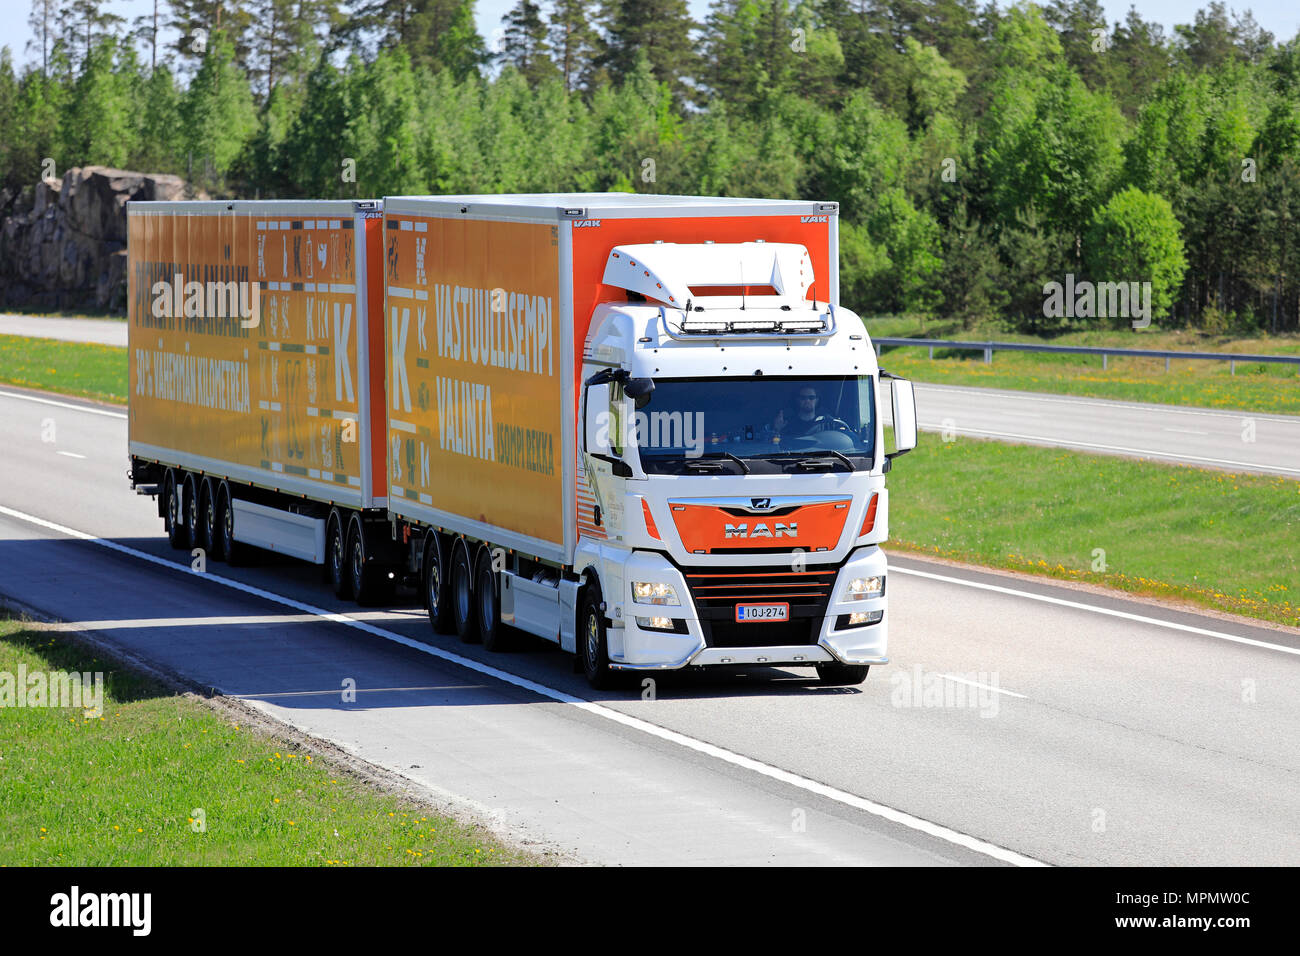 Man TGX 35.580 High Capacity Transport truck for Kesko Logistics. The 31,2m long 74tn road train operates by permission. Paimio, Finland - May 18, 18. Stock Photo